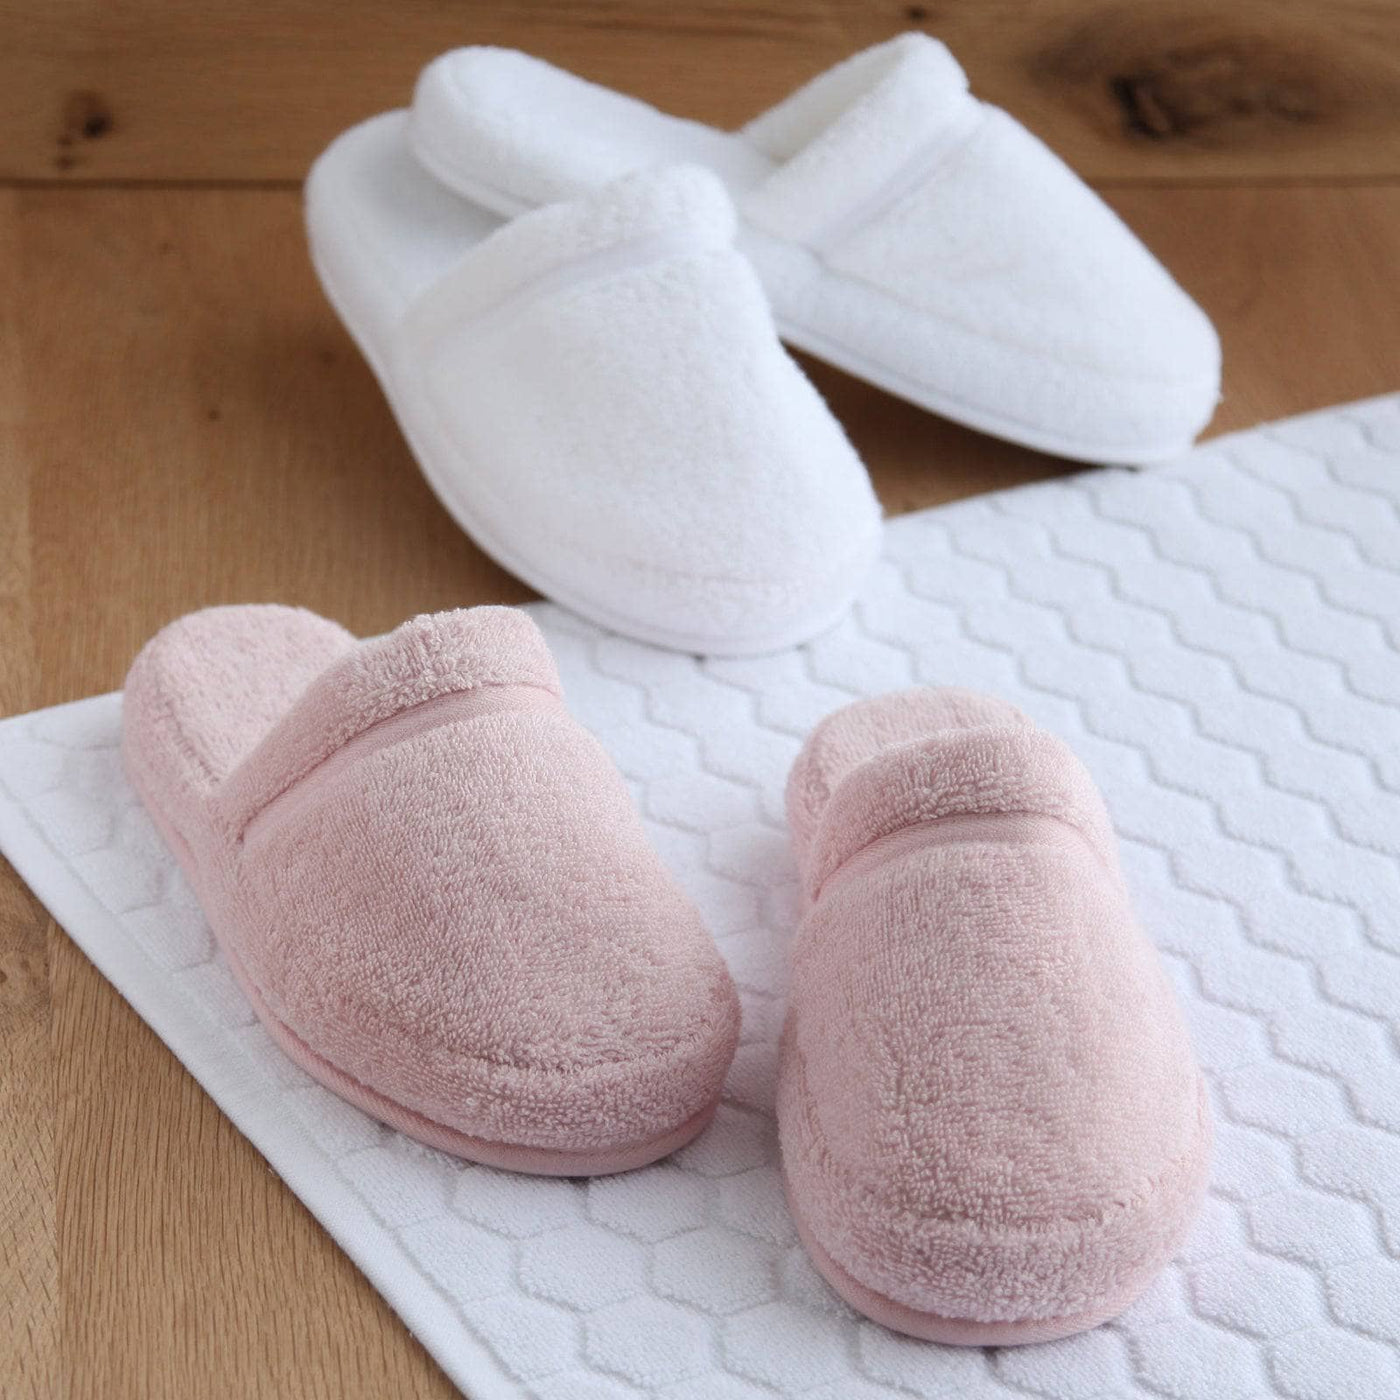 Rosalie 100% Turkish Cotton Bath Slipper, Pink, 4-5 Bath Slippers sazy.com